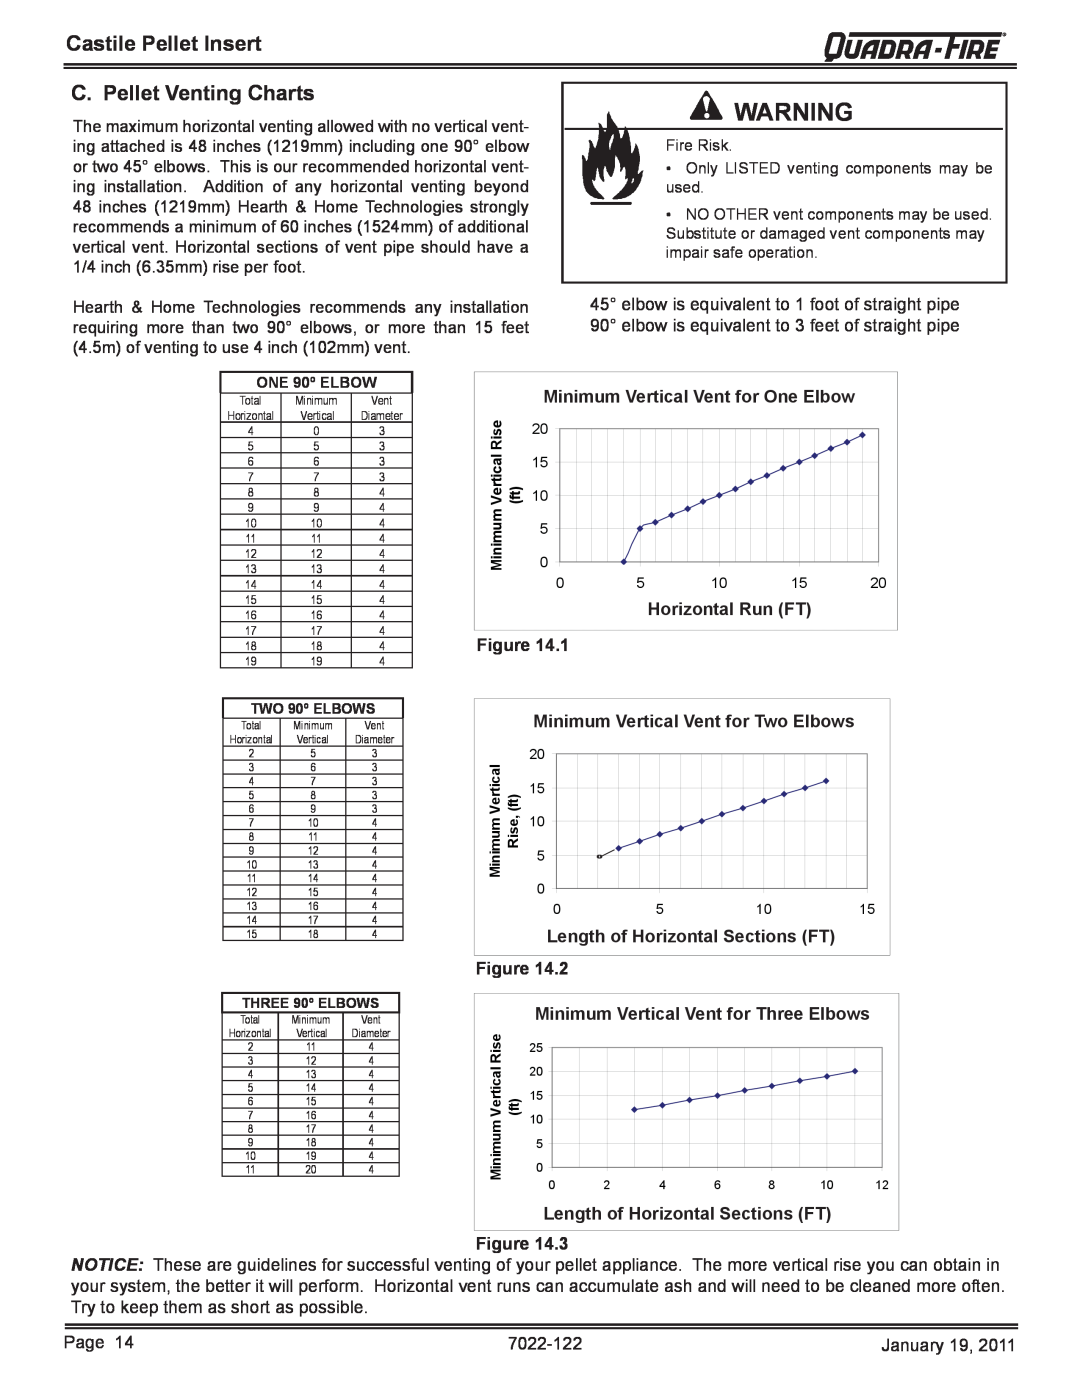 Quadra-Fire CASTILEI-MBK owner manual C. Pellet Venting Charts, Castile Pellet Insert, Minimum Vent for One Elbow, Figure 